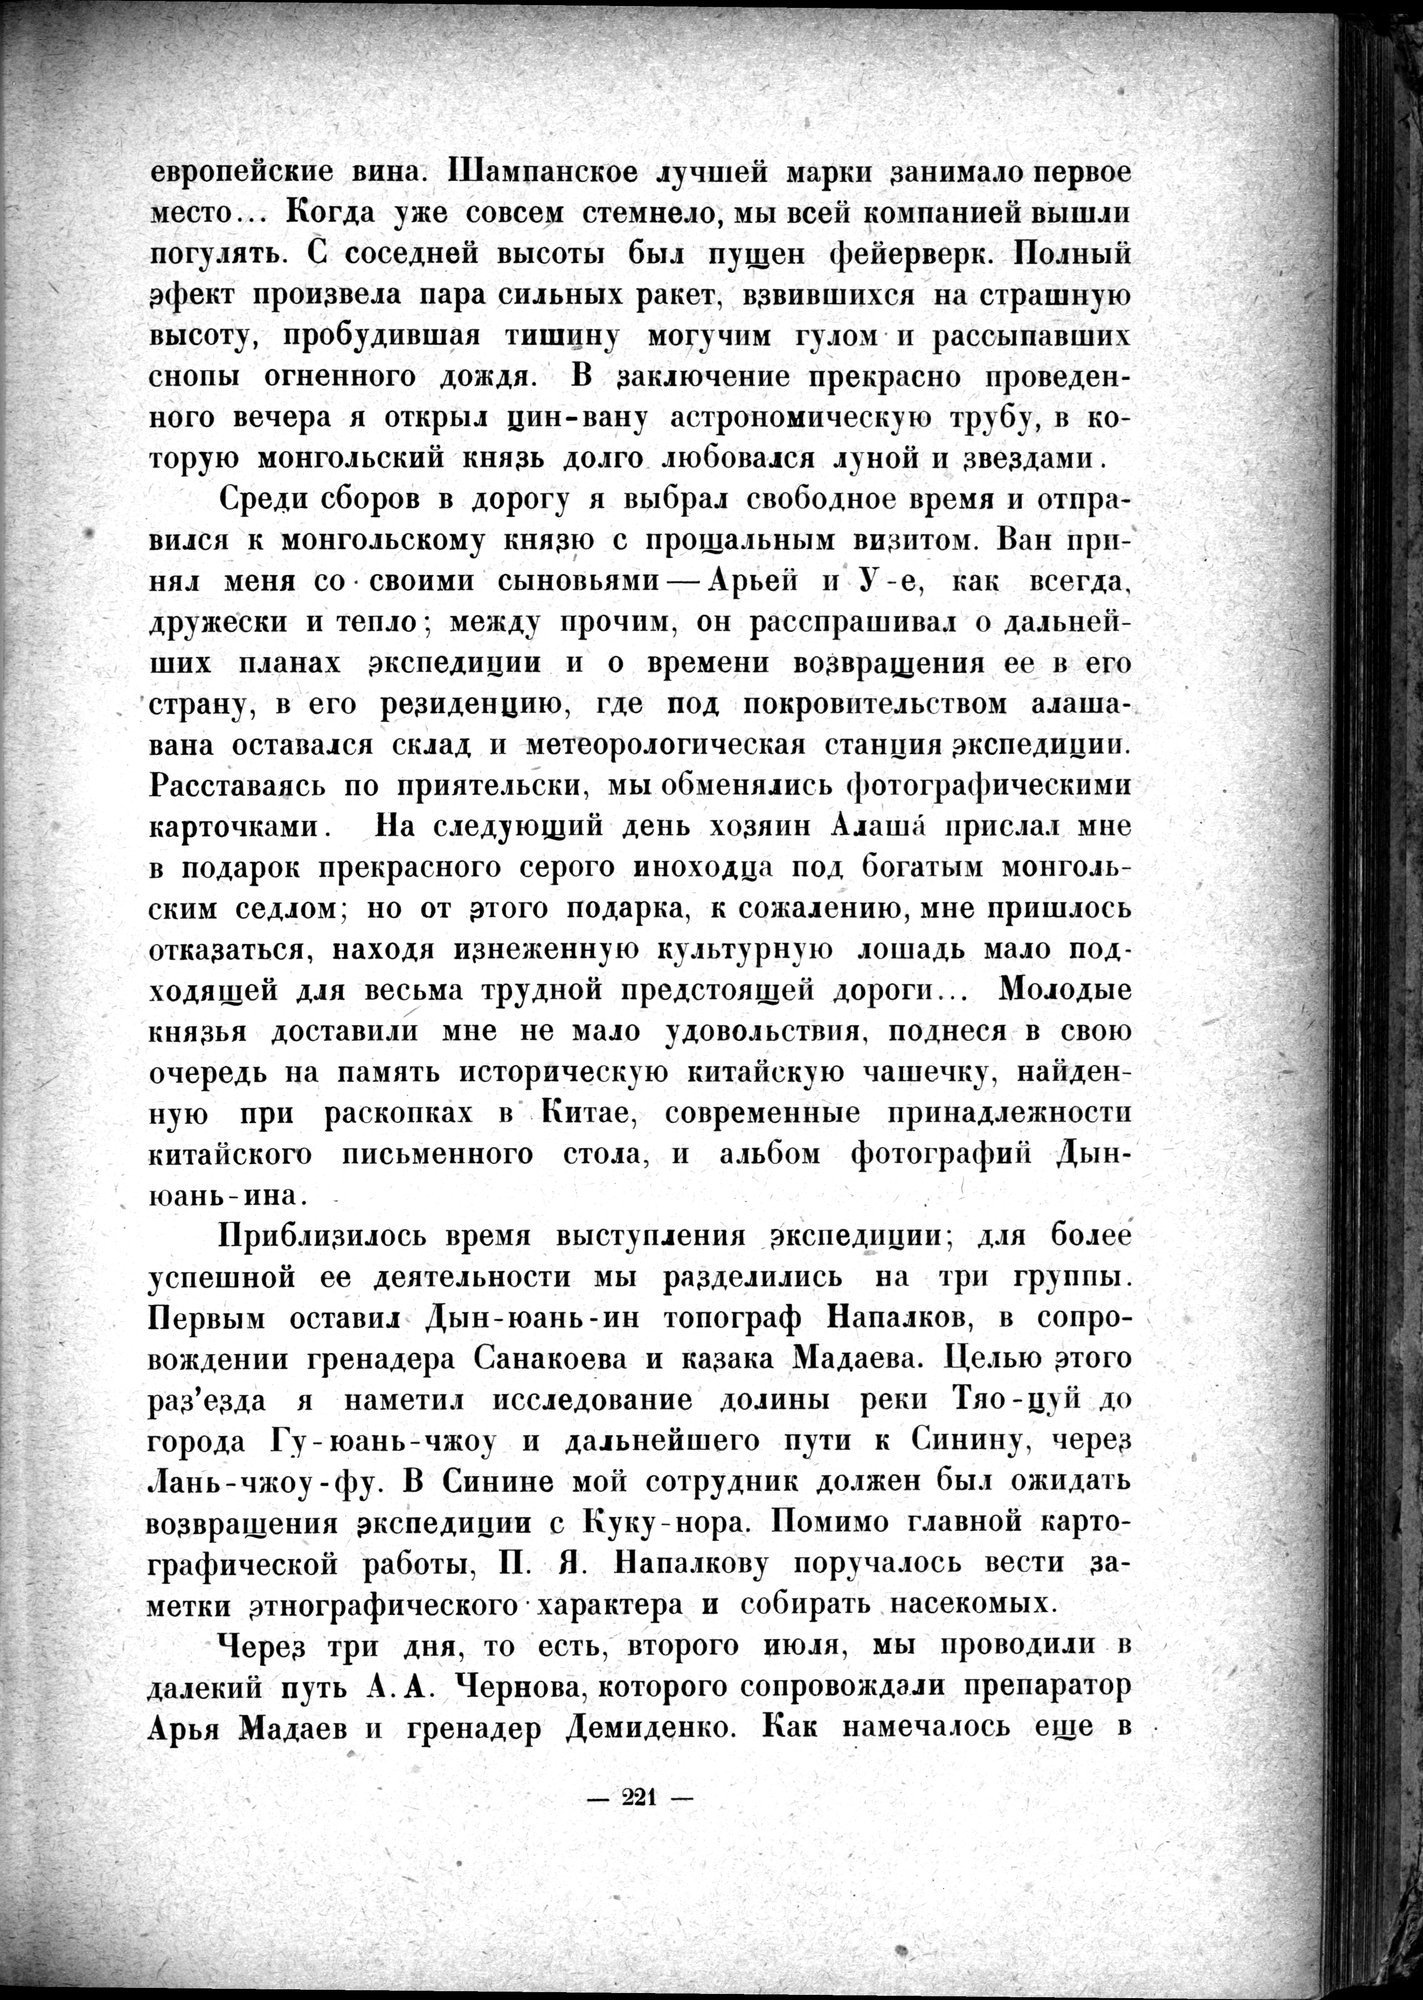 Mongoliya i Amdo i mertby gorod Khara-Khoto : vol.1 / Page 267 (Grayscale High Resolution Image)